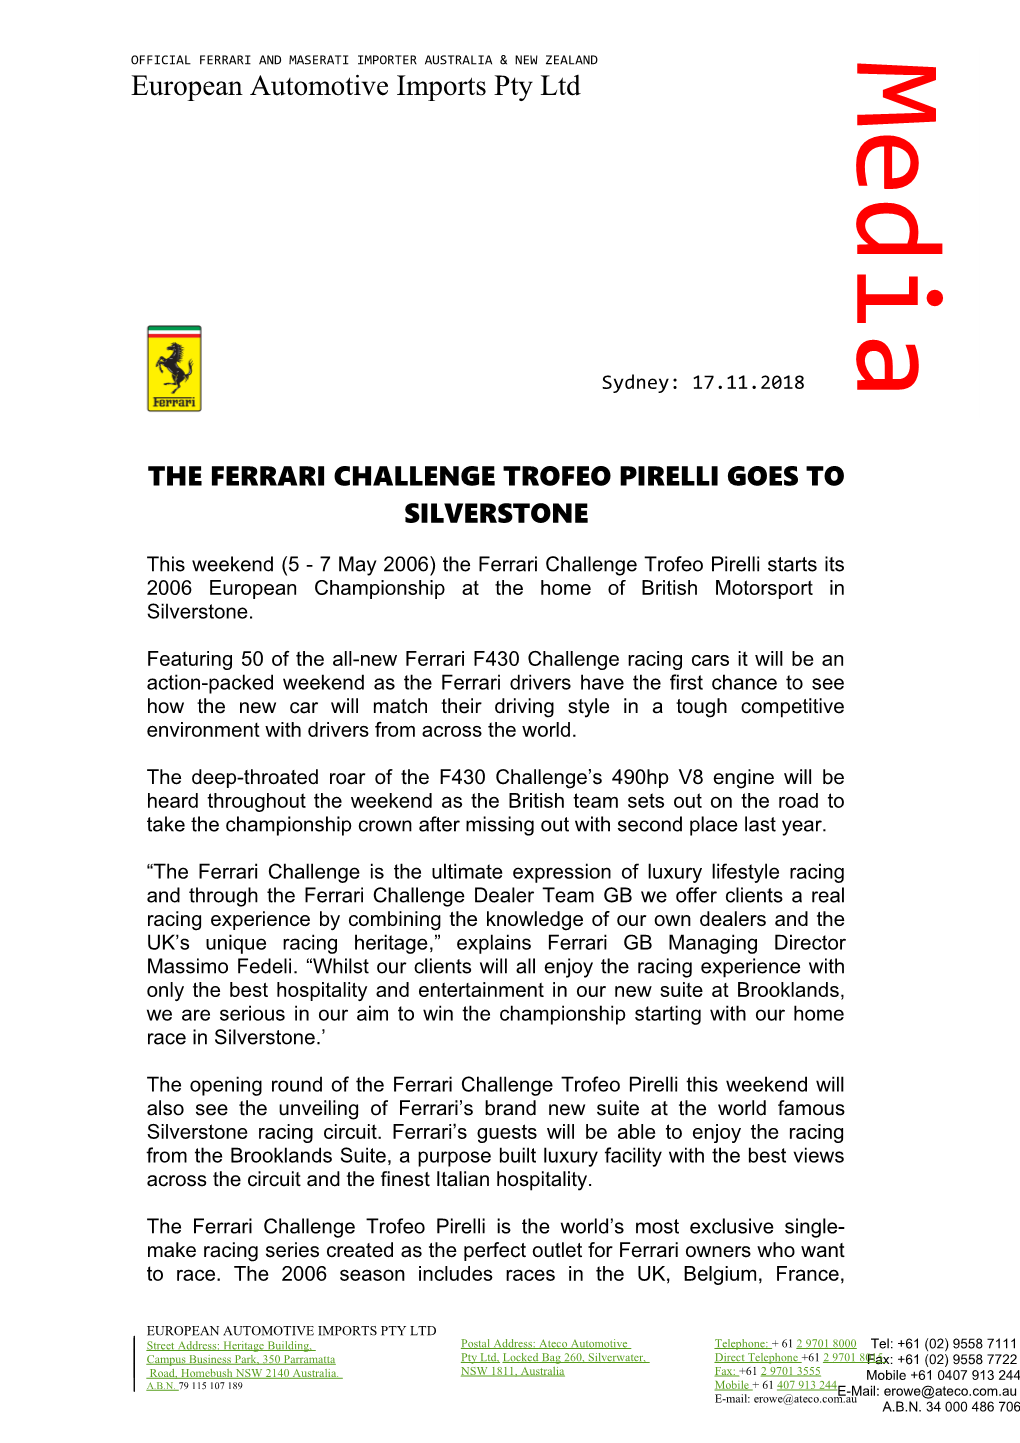 The Ferrari Challenge Trofeo Pirelli GOES to Silverstone